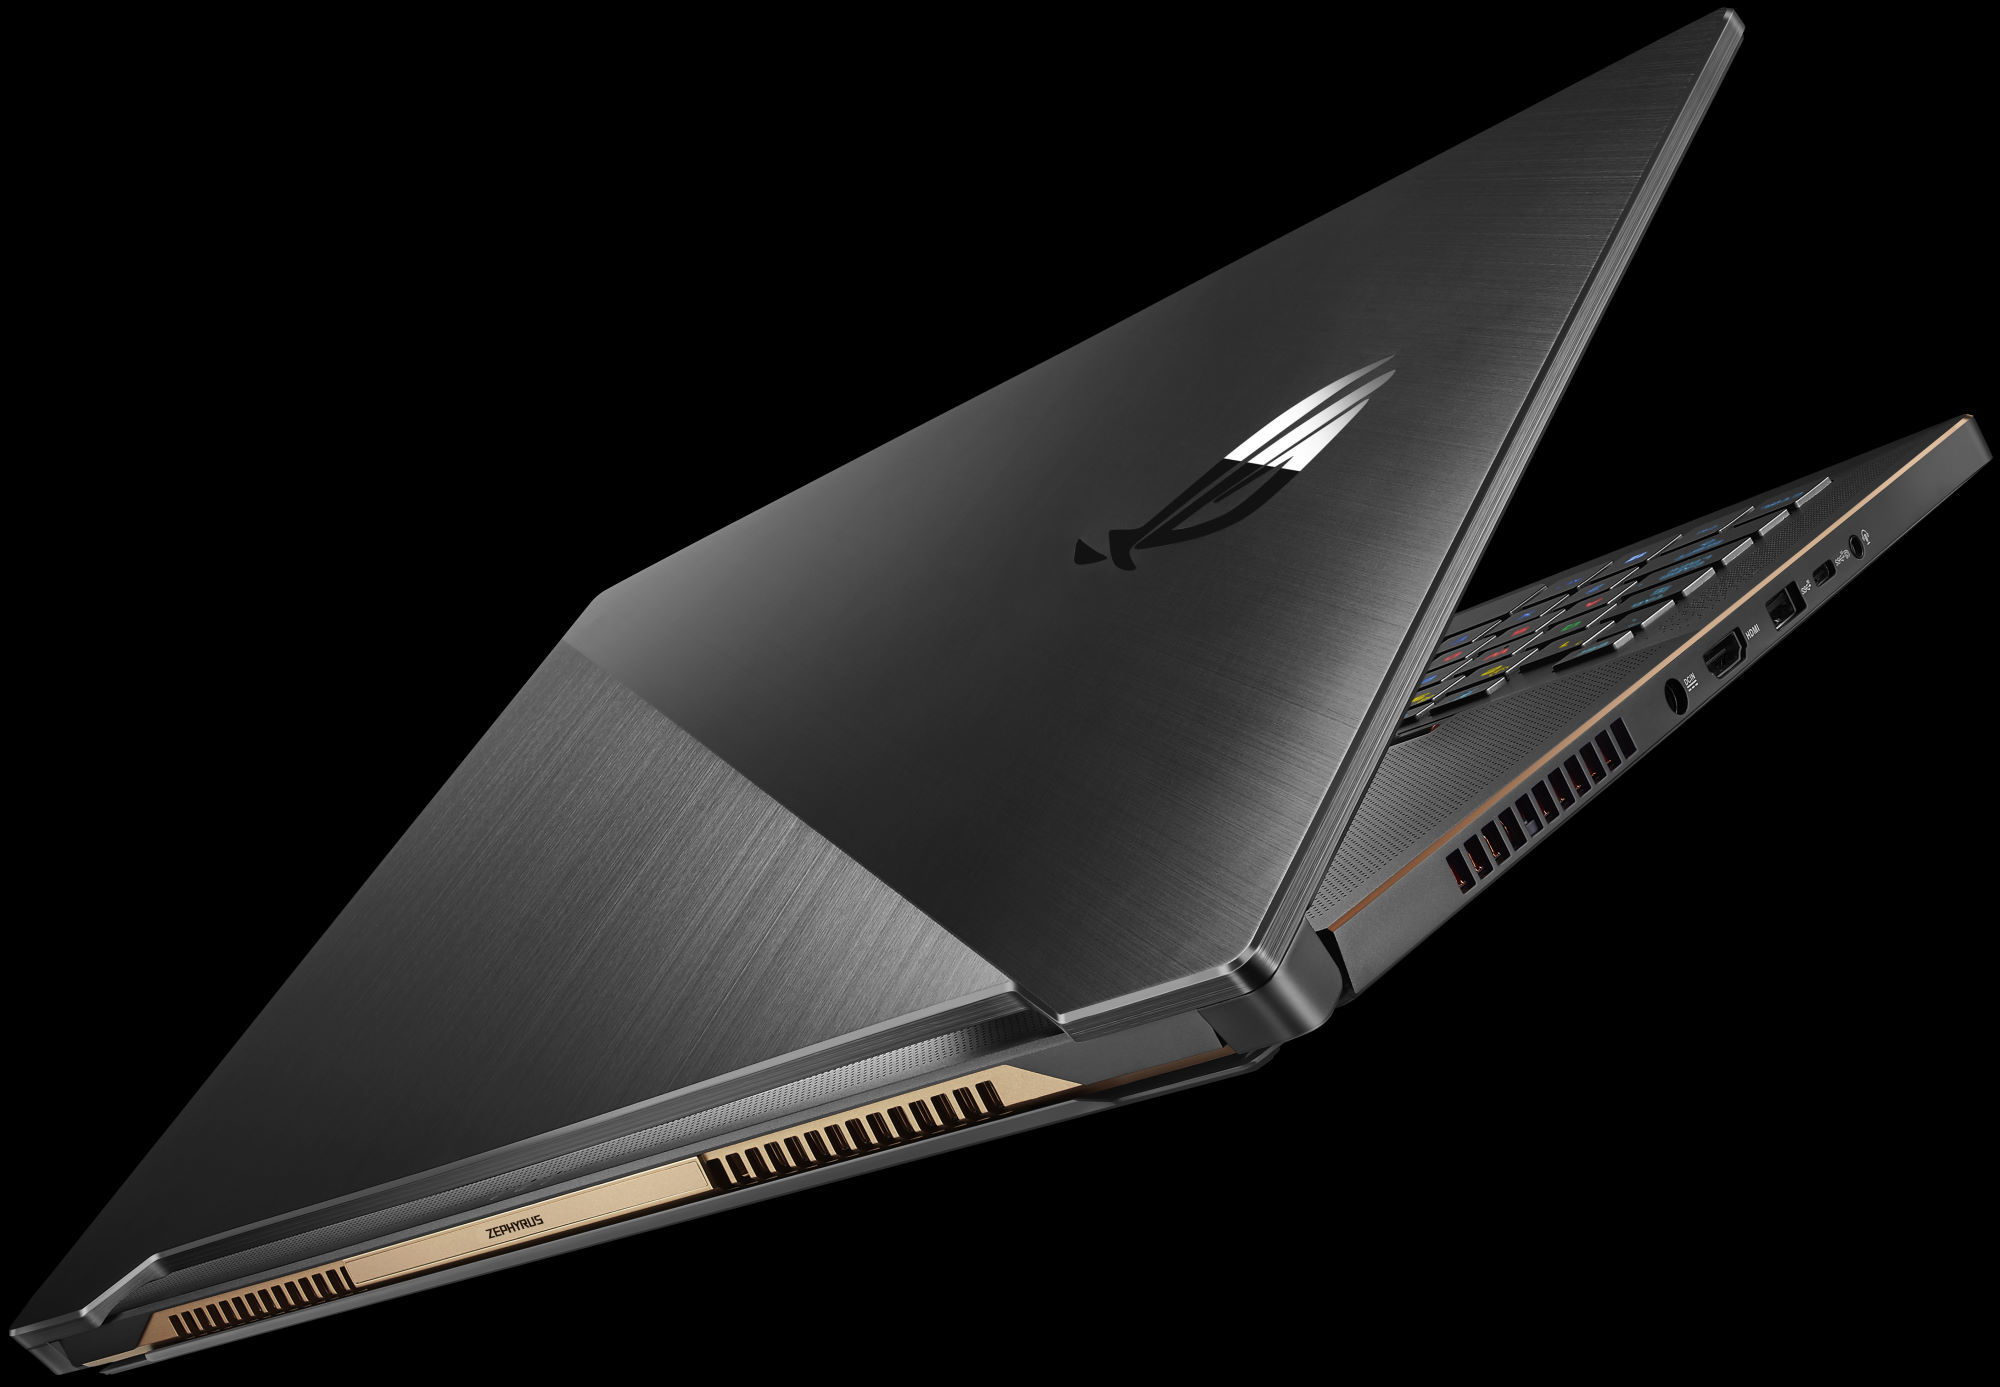 New ASUS ROG Zephyrus and Strix liquid metal cooling gaming laptops 1585818430828.jpg